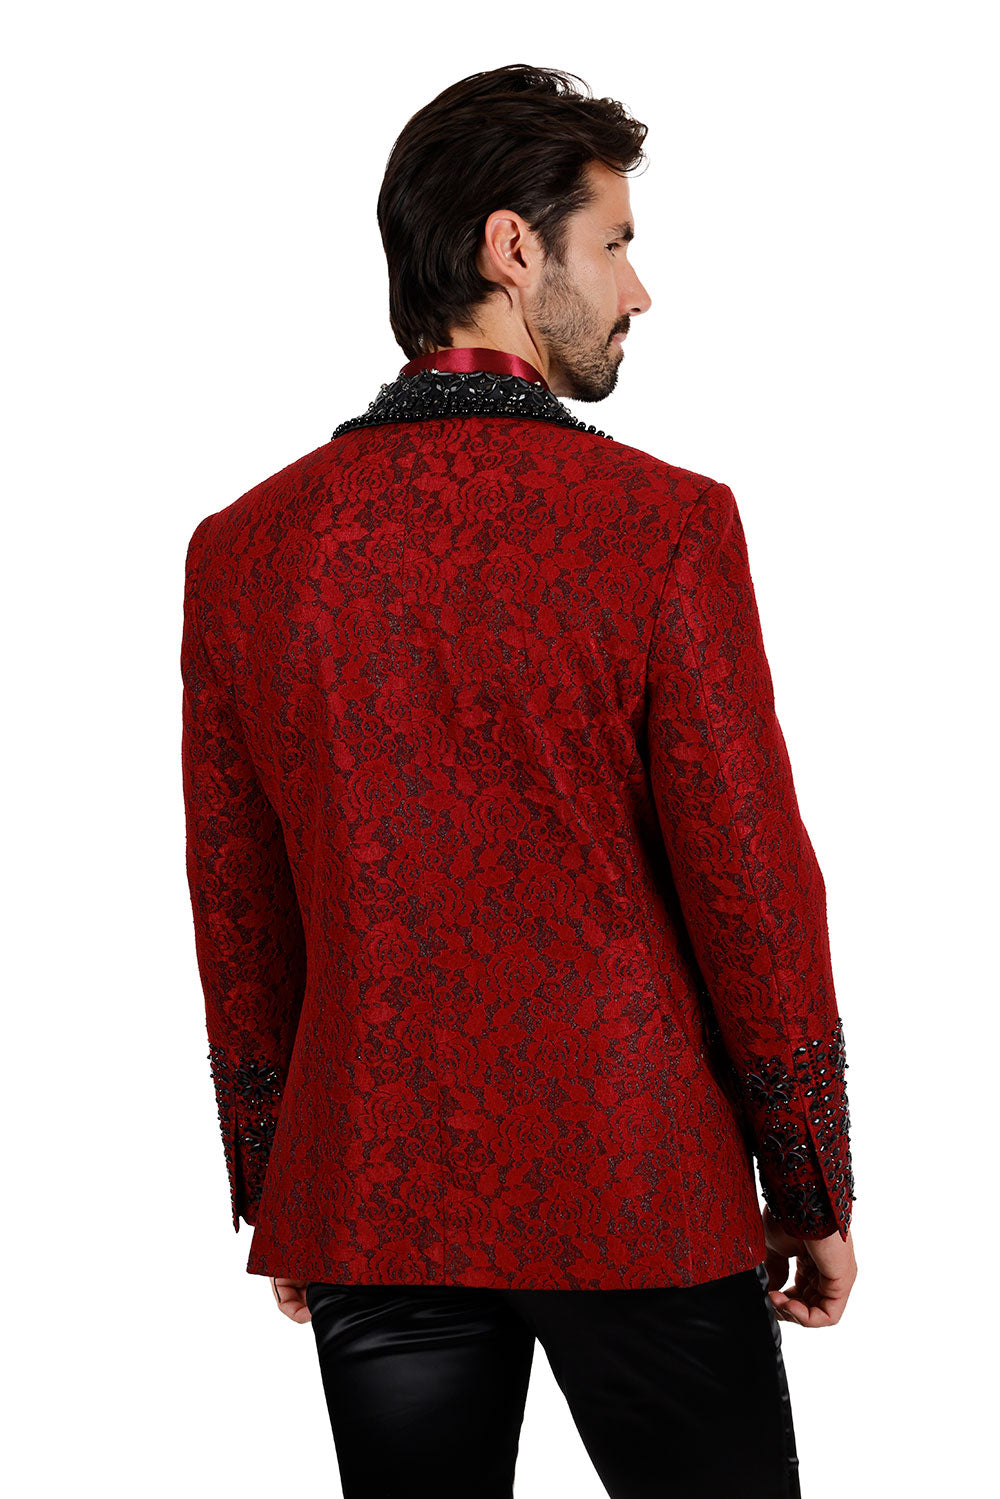 Barabas Elite Men's Rhinestone Floral Luxury Shawl Lapel Blazer 3EBL15 Red Black